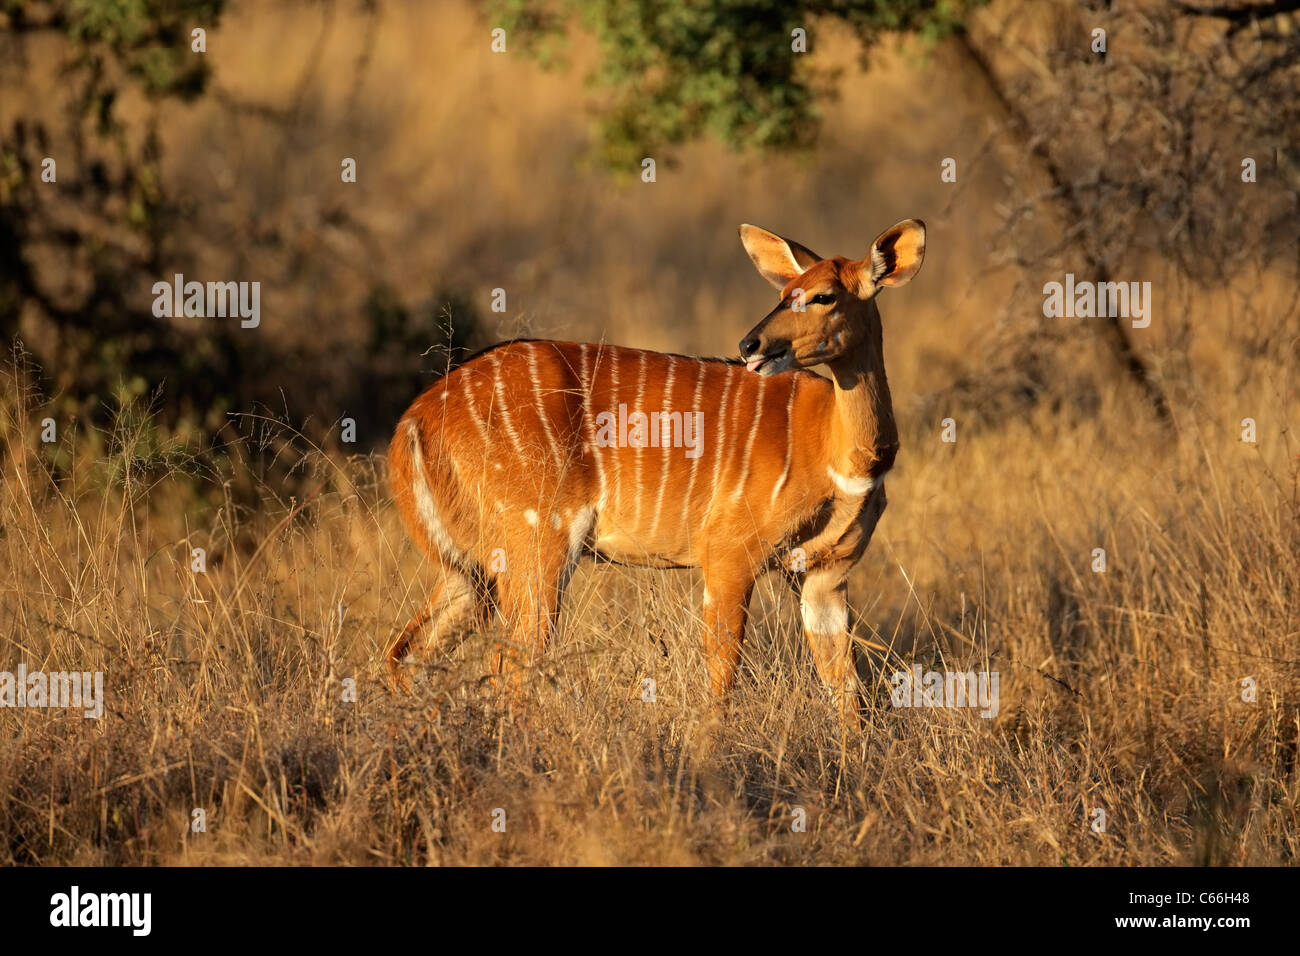 Antilope Nyala femelle (Tragelaphus angasii), Afrique du Sud Banque D'Images